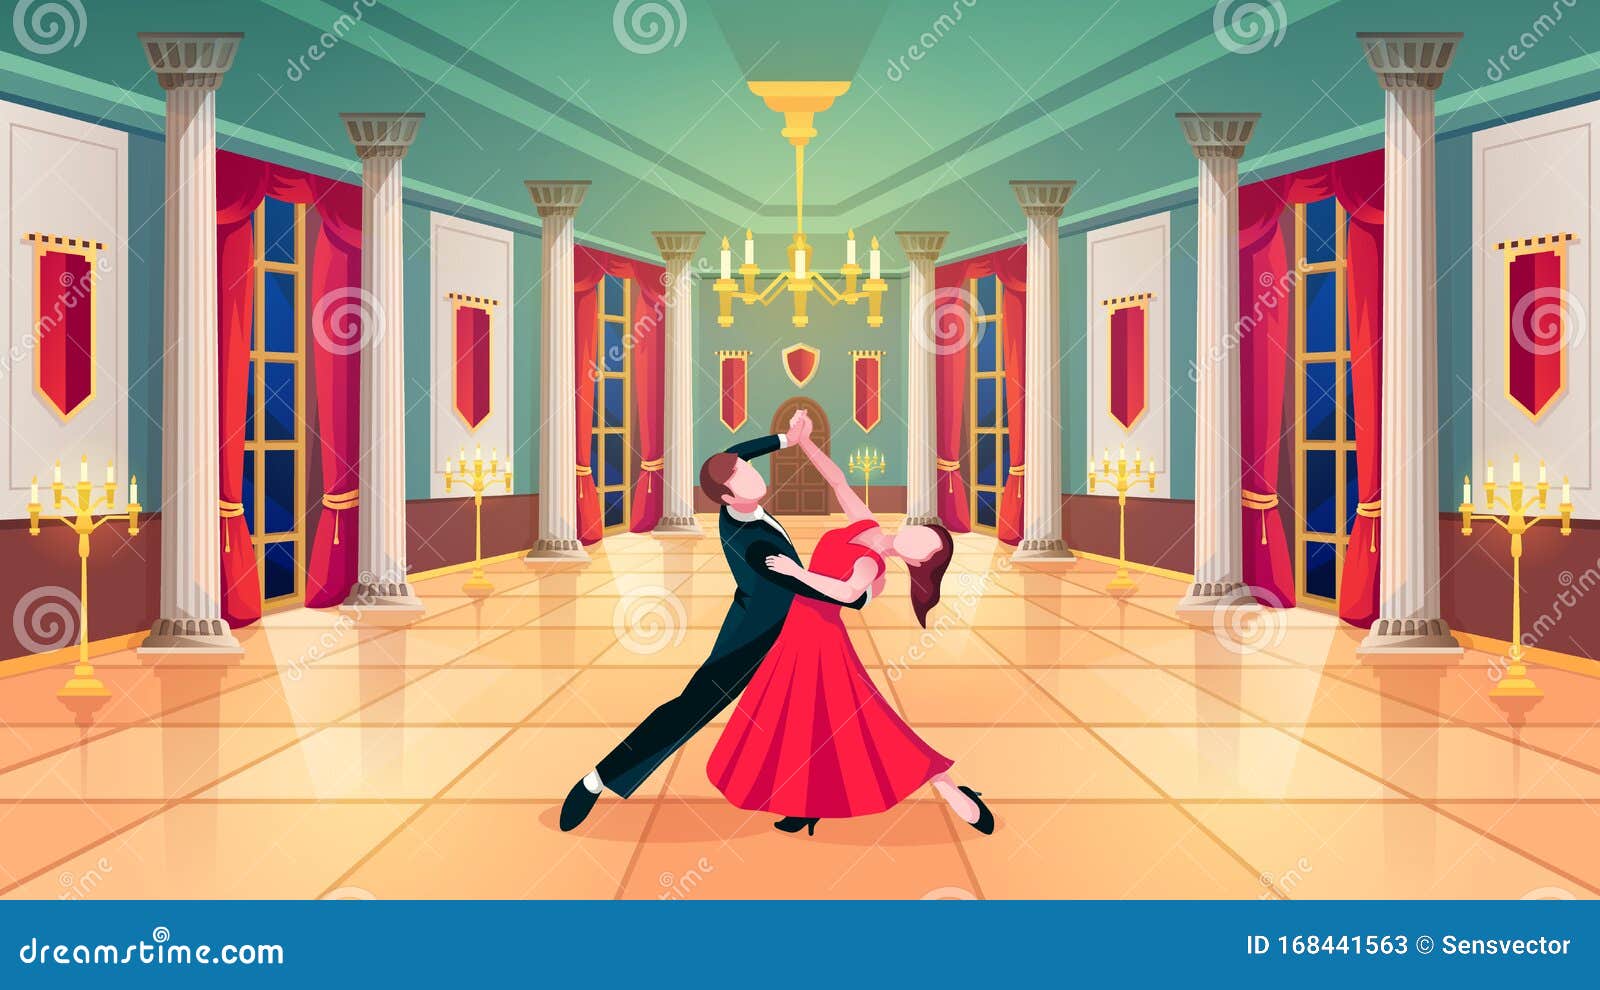 waltz dancers in royal palace ballroom hall